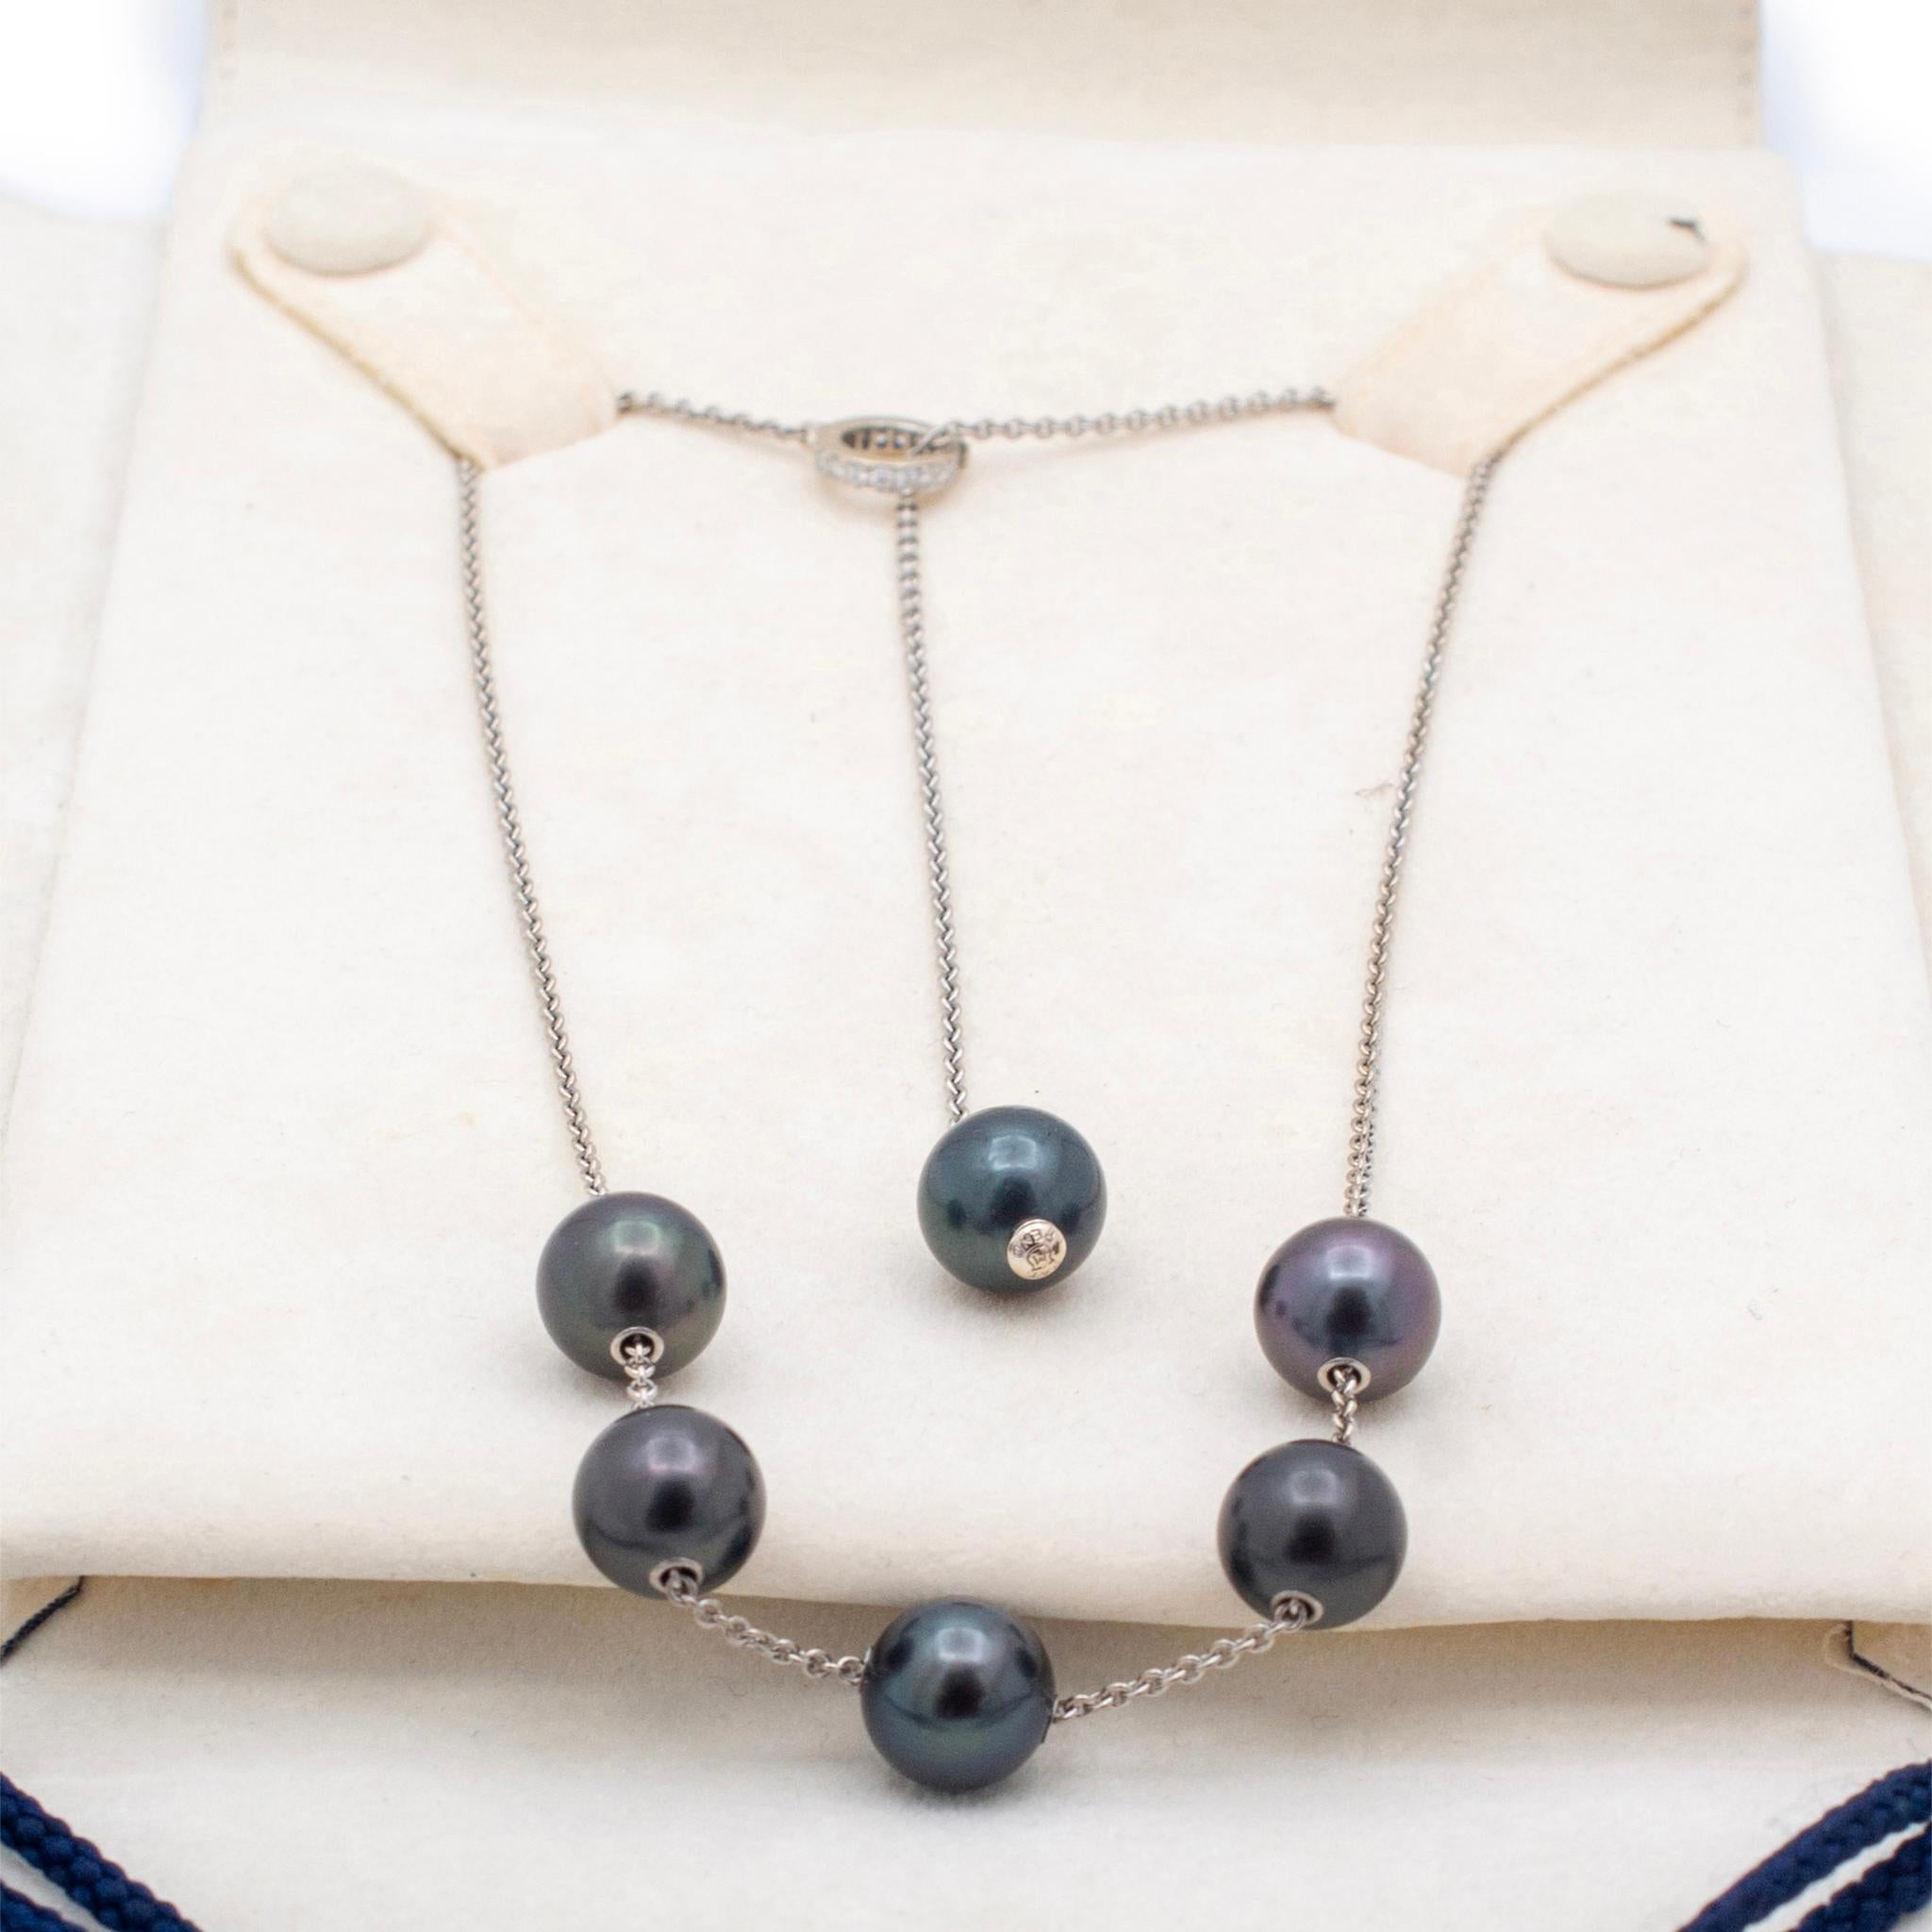 mikimoto pearls in motion earrings